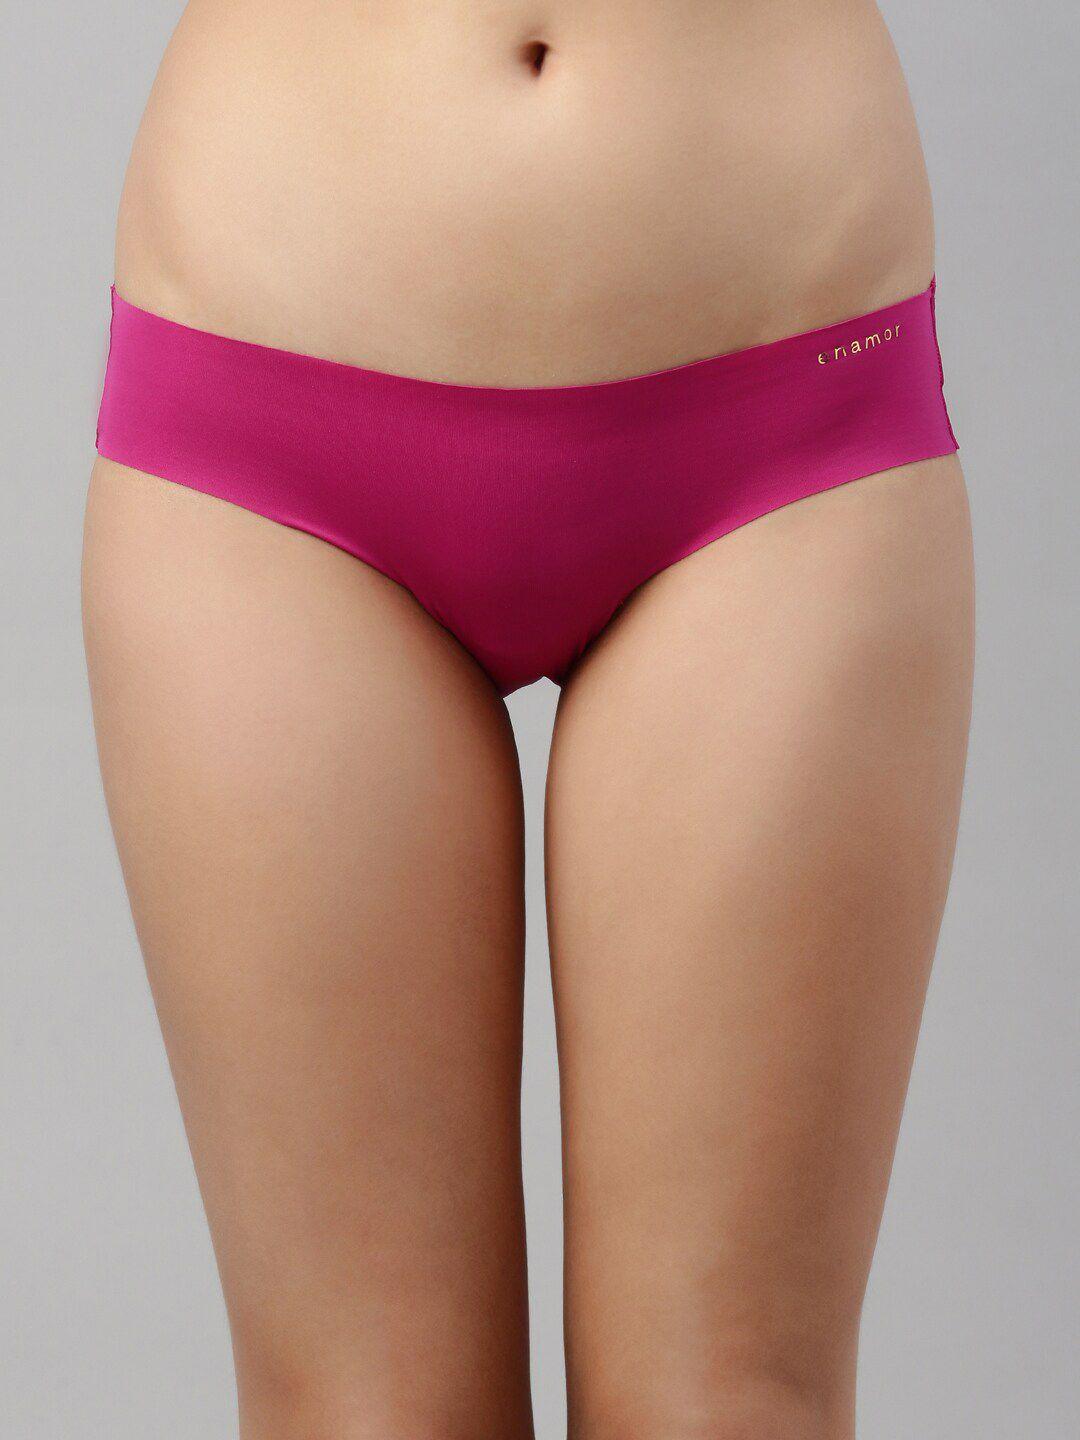 enamor-women-pink-solid-bikini-briefs